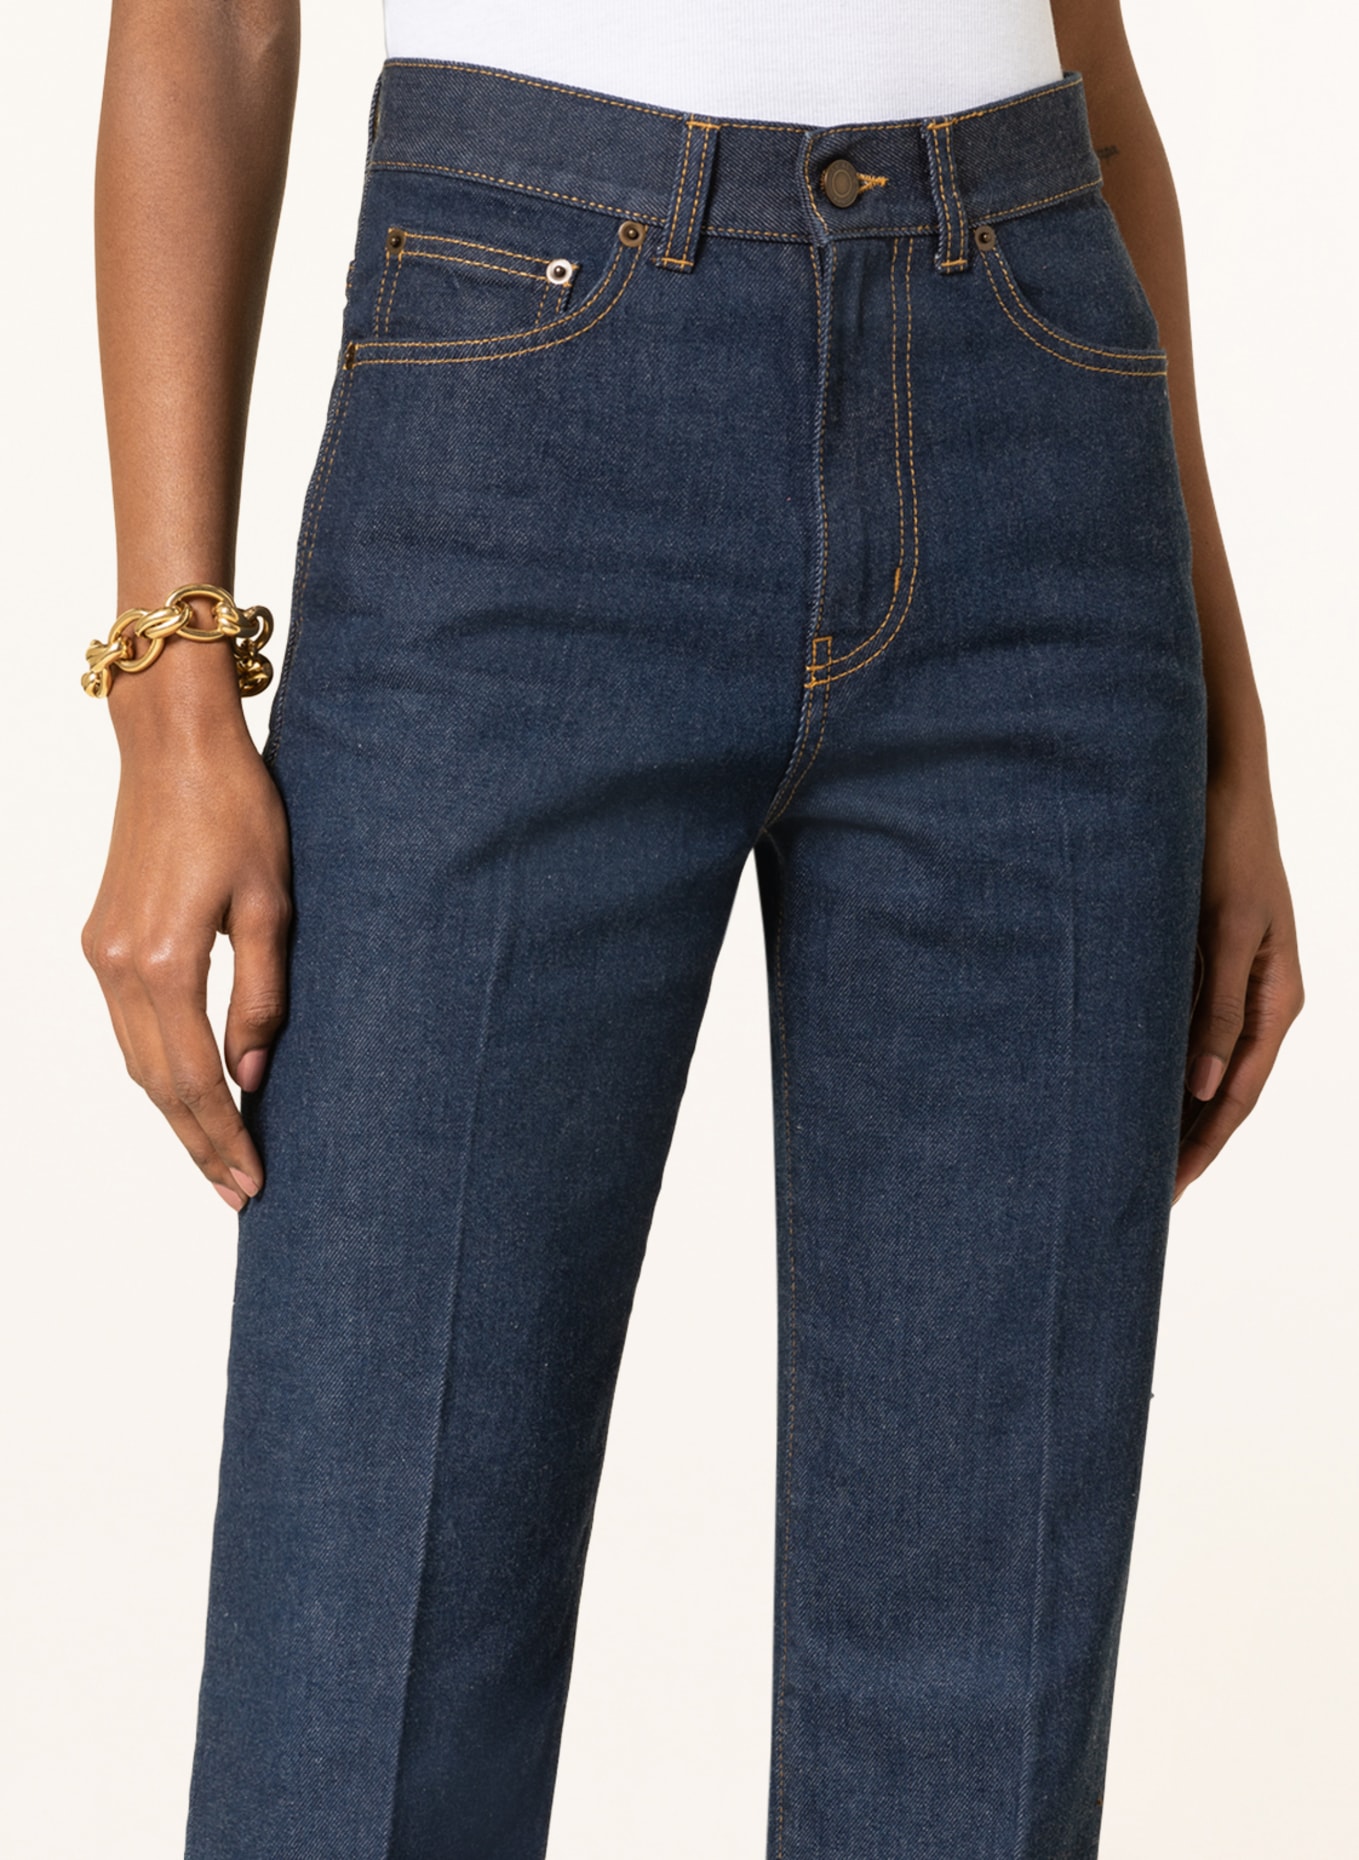 SAINT LAURENT Jeans CLYDE, Farbe: 4127 MEDIUM BLUE RINSE (Bild 5)